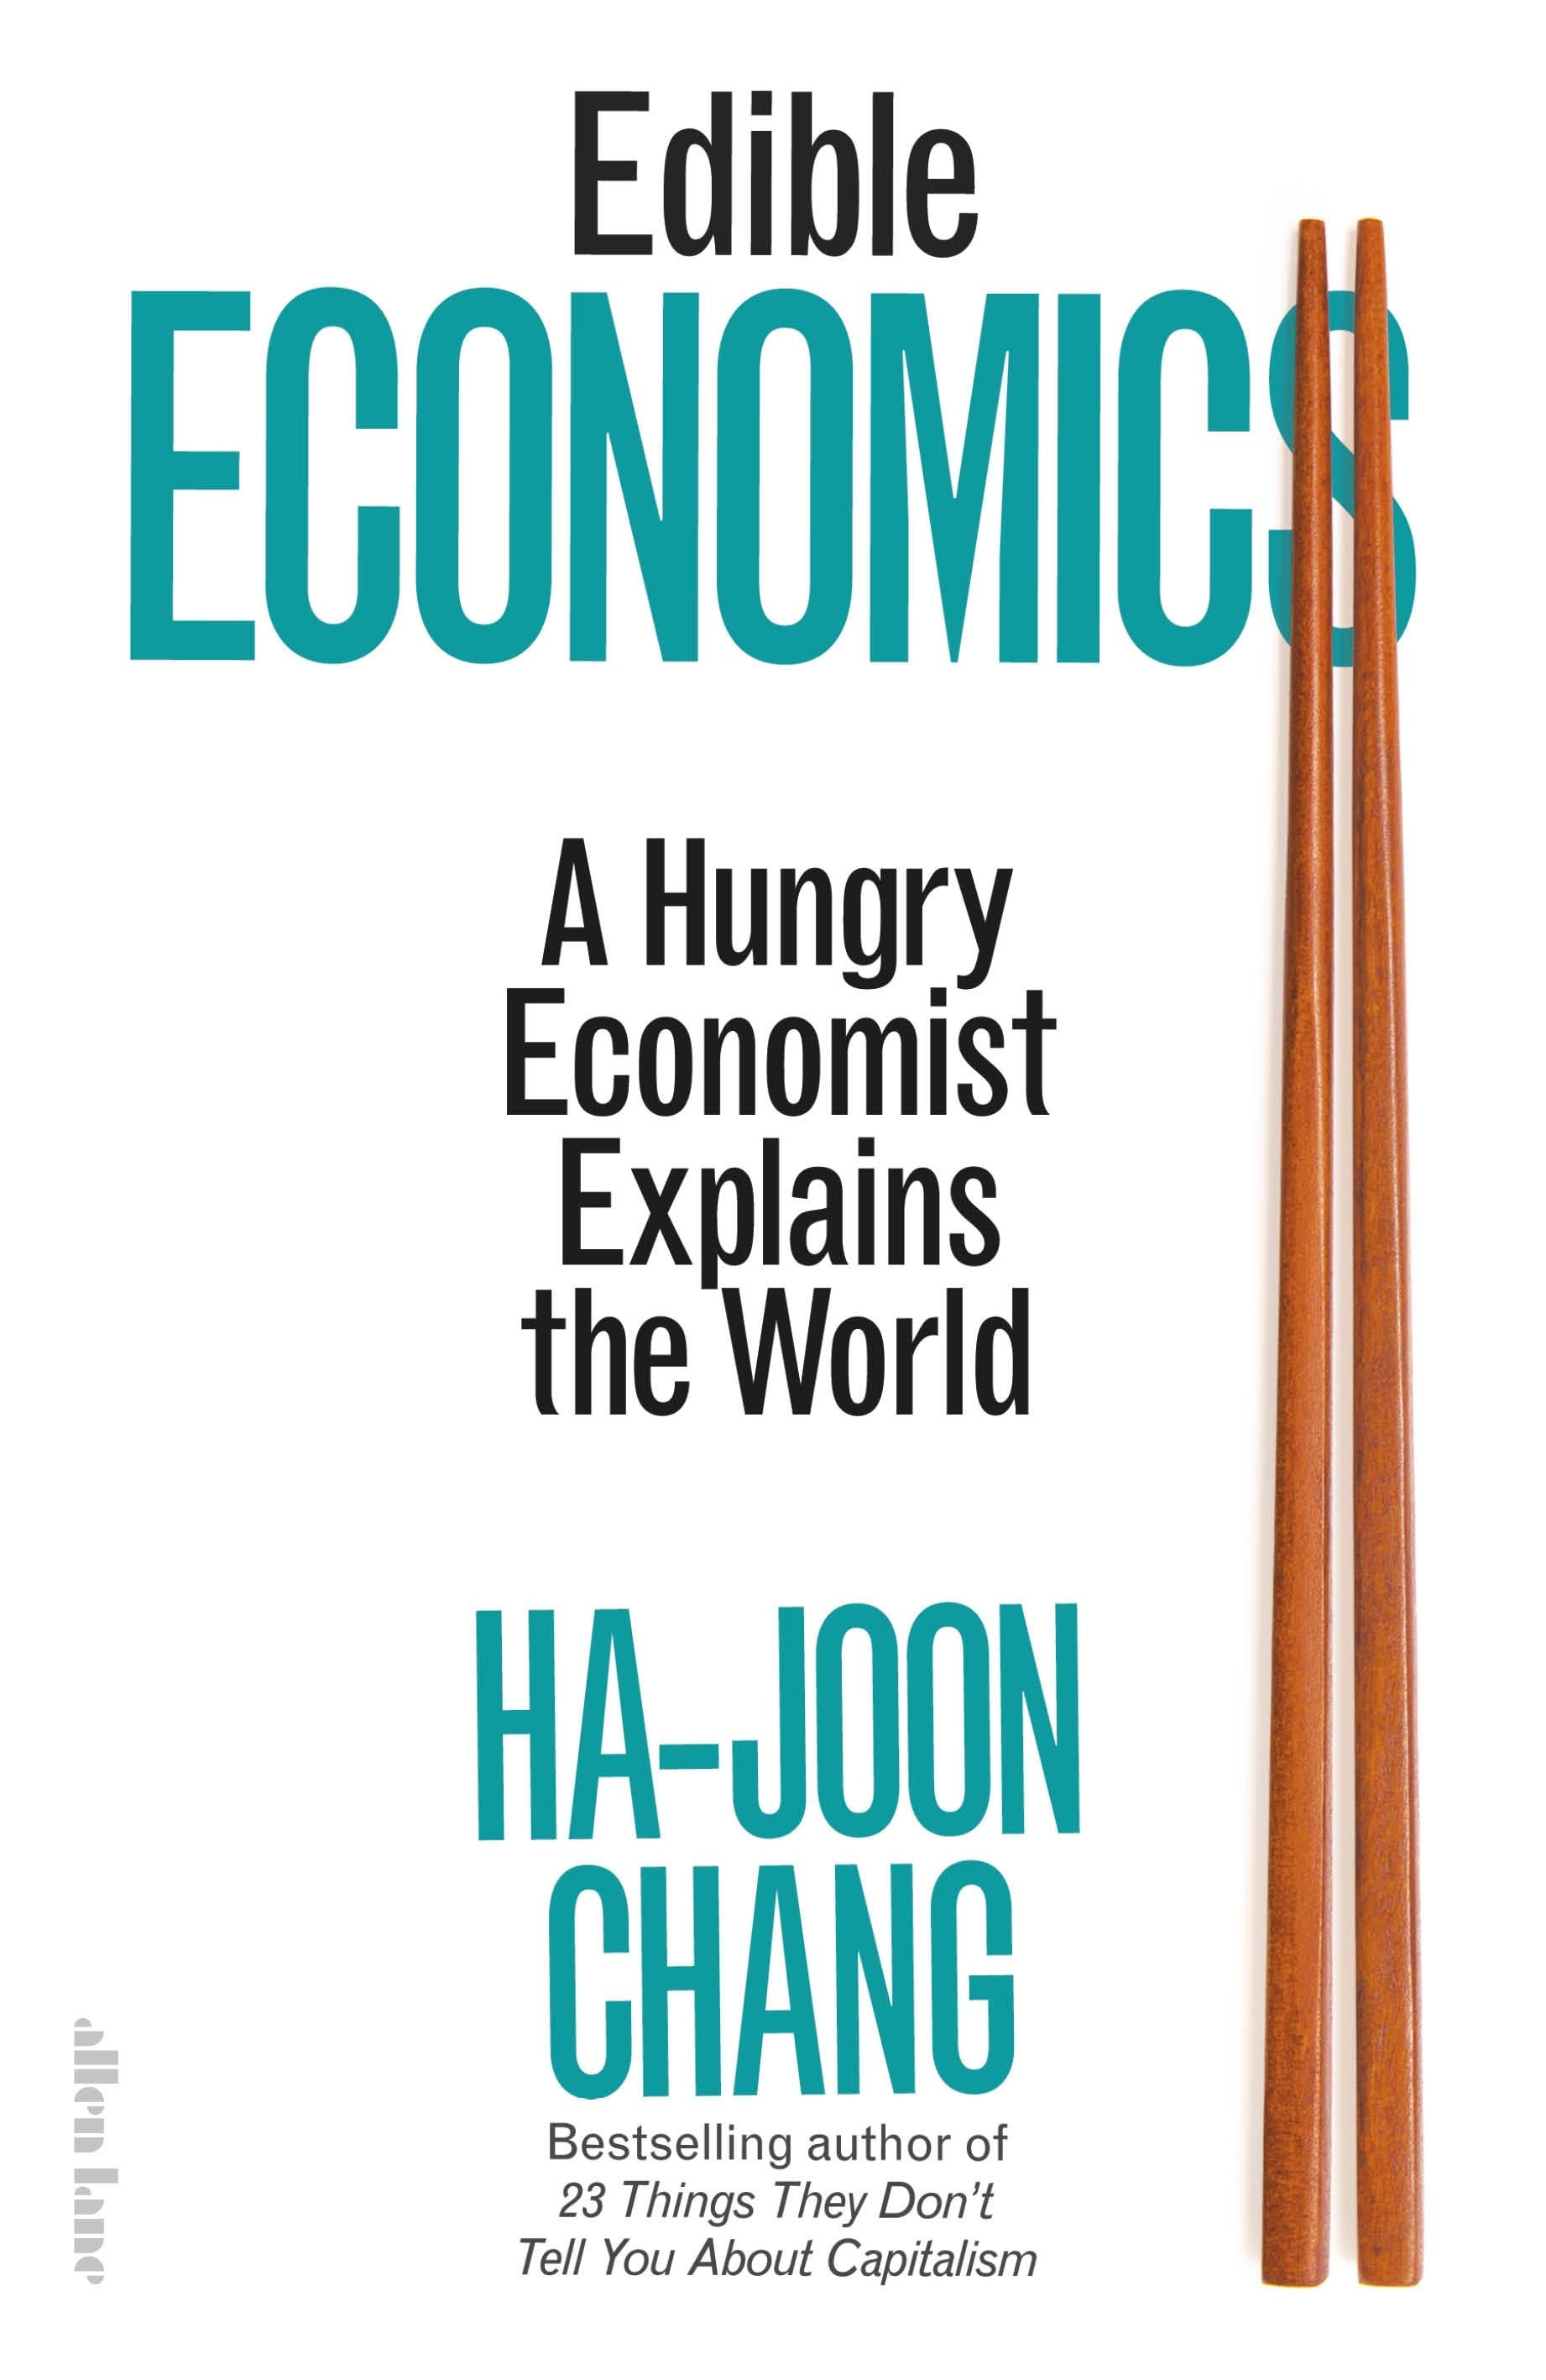 Book “Edible Economics” by Ha-Joon Chang — October 27, 2022